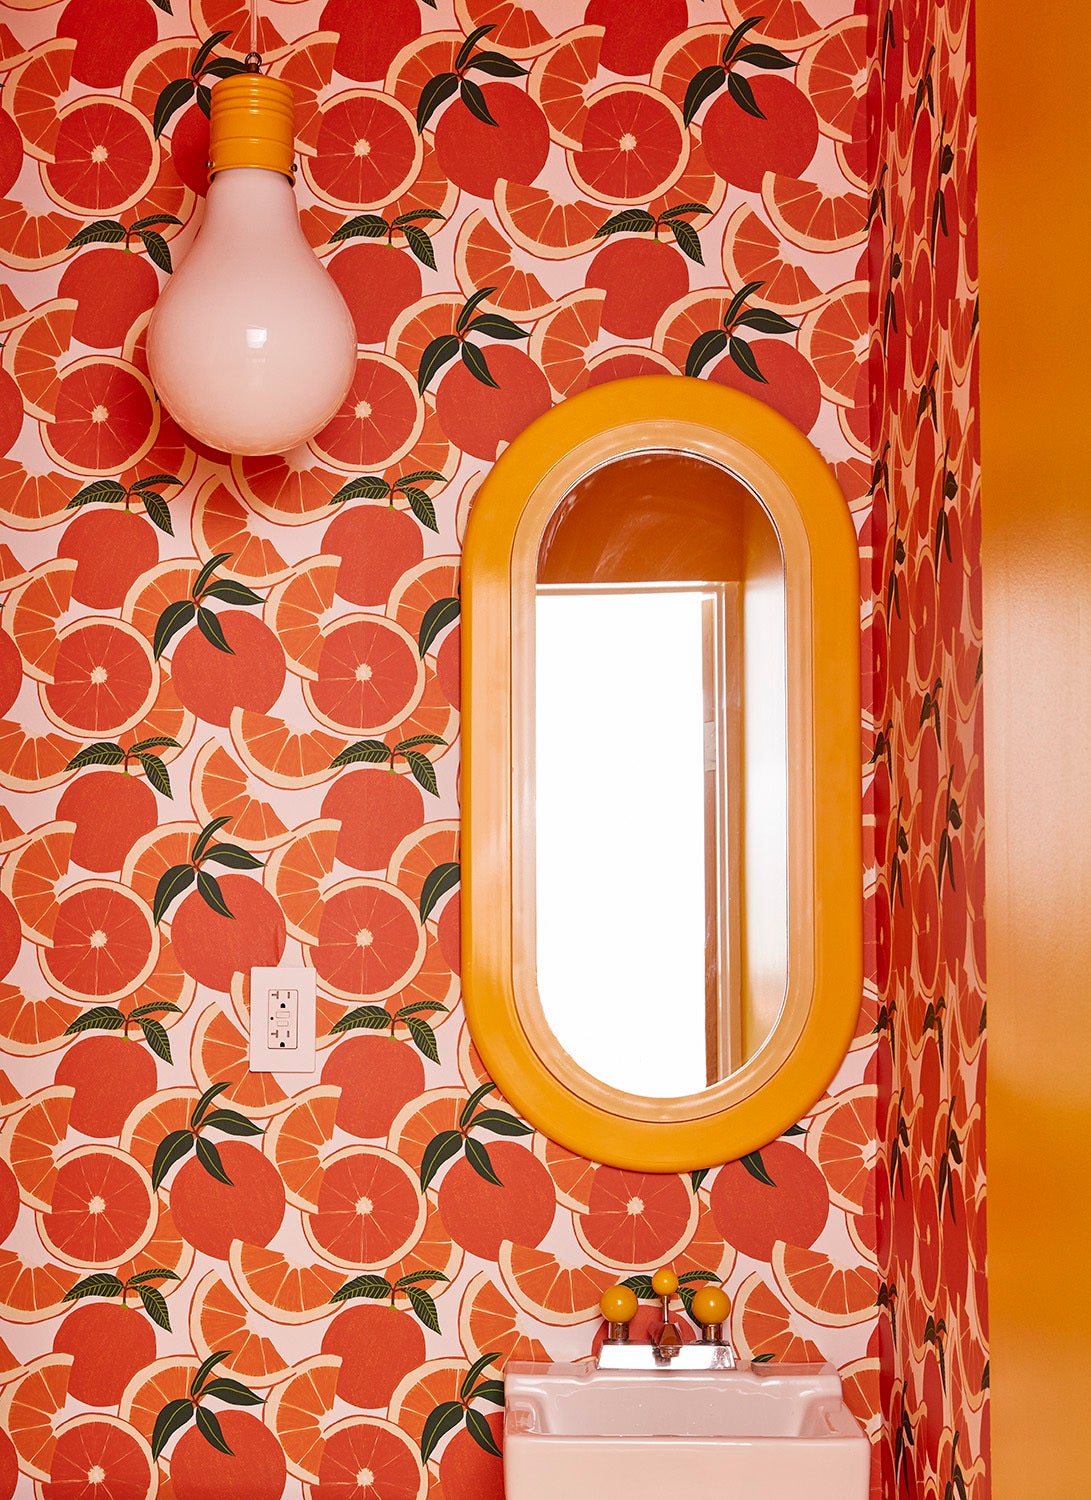 Orange citrus wallpaper and yellow mirror in bathroom